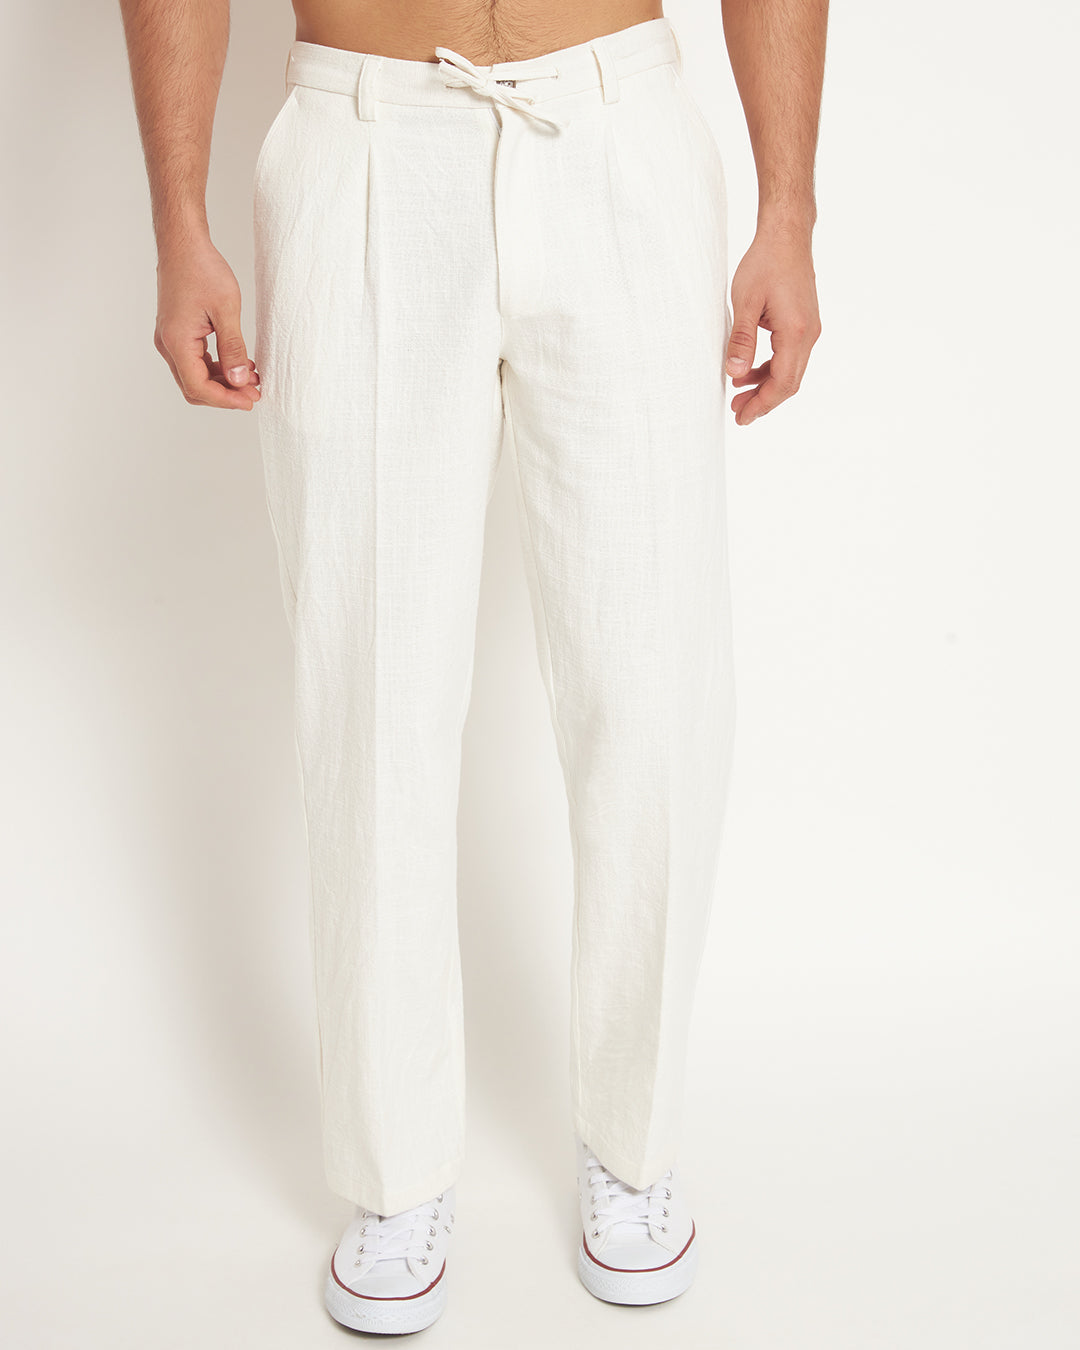 Combo: Casual Ease Beige & White Men's Pants - Set of 2